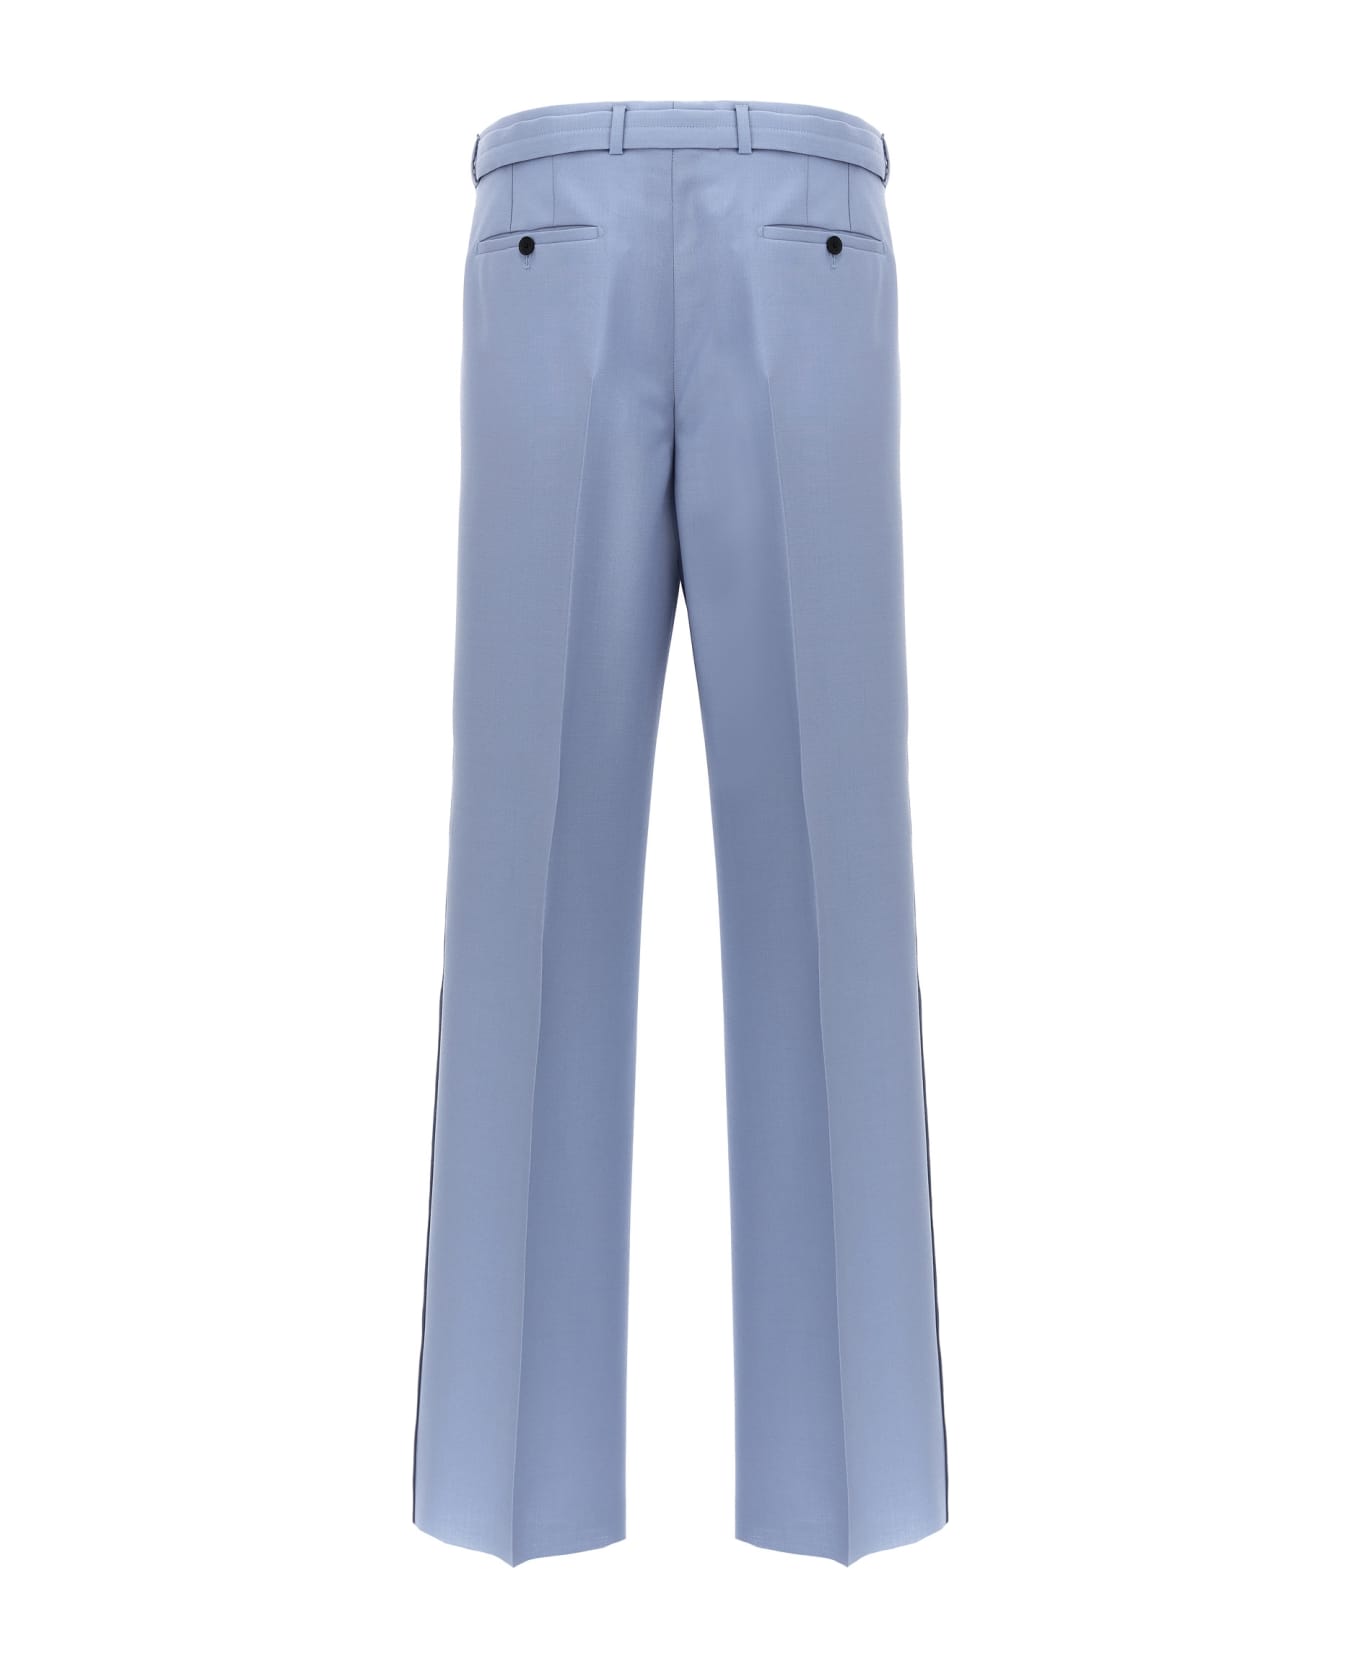 Lanvin Front Pleat Pants - Light Blue ボトムス